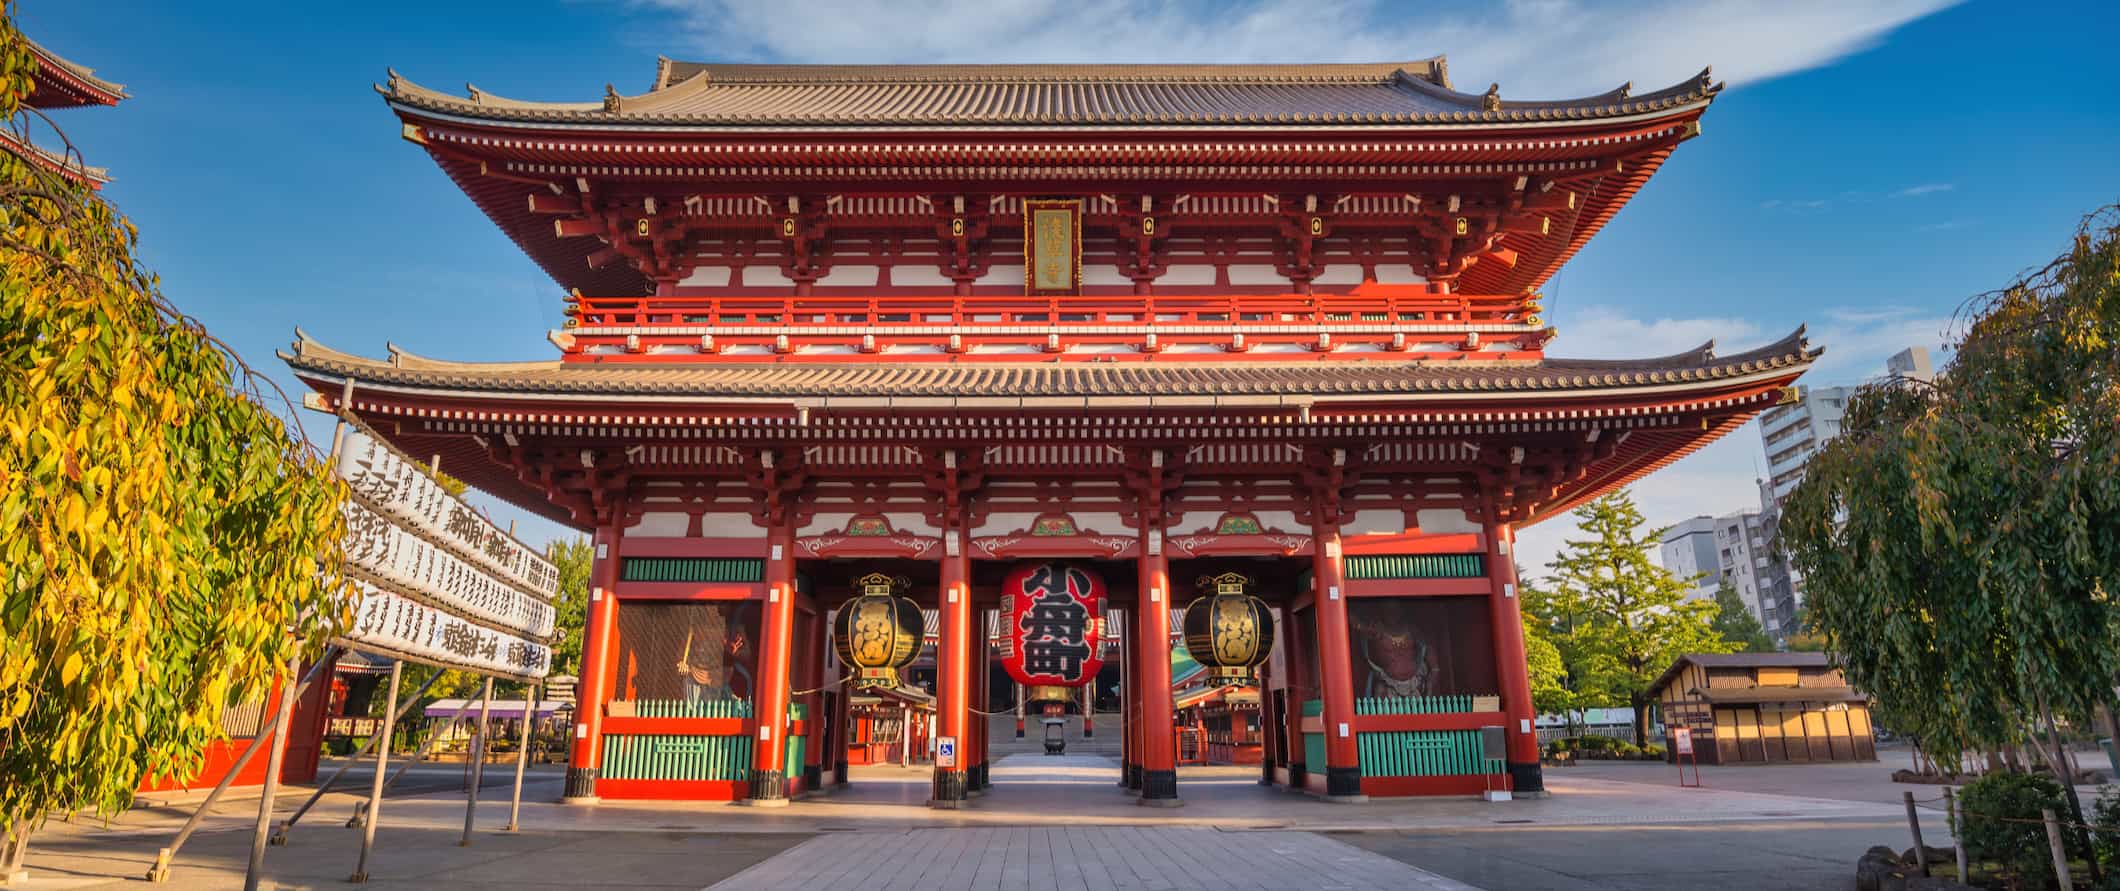 The towering and colorful Sensoji Temple in Tokyo, Japan